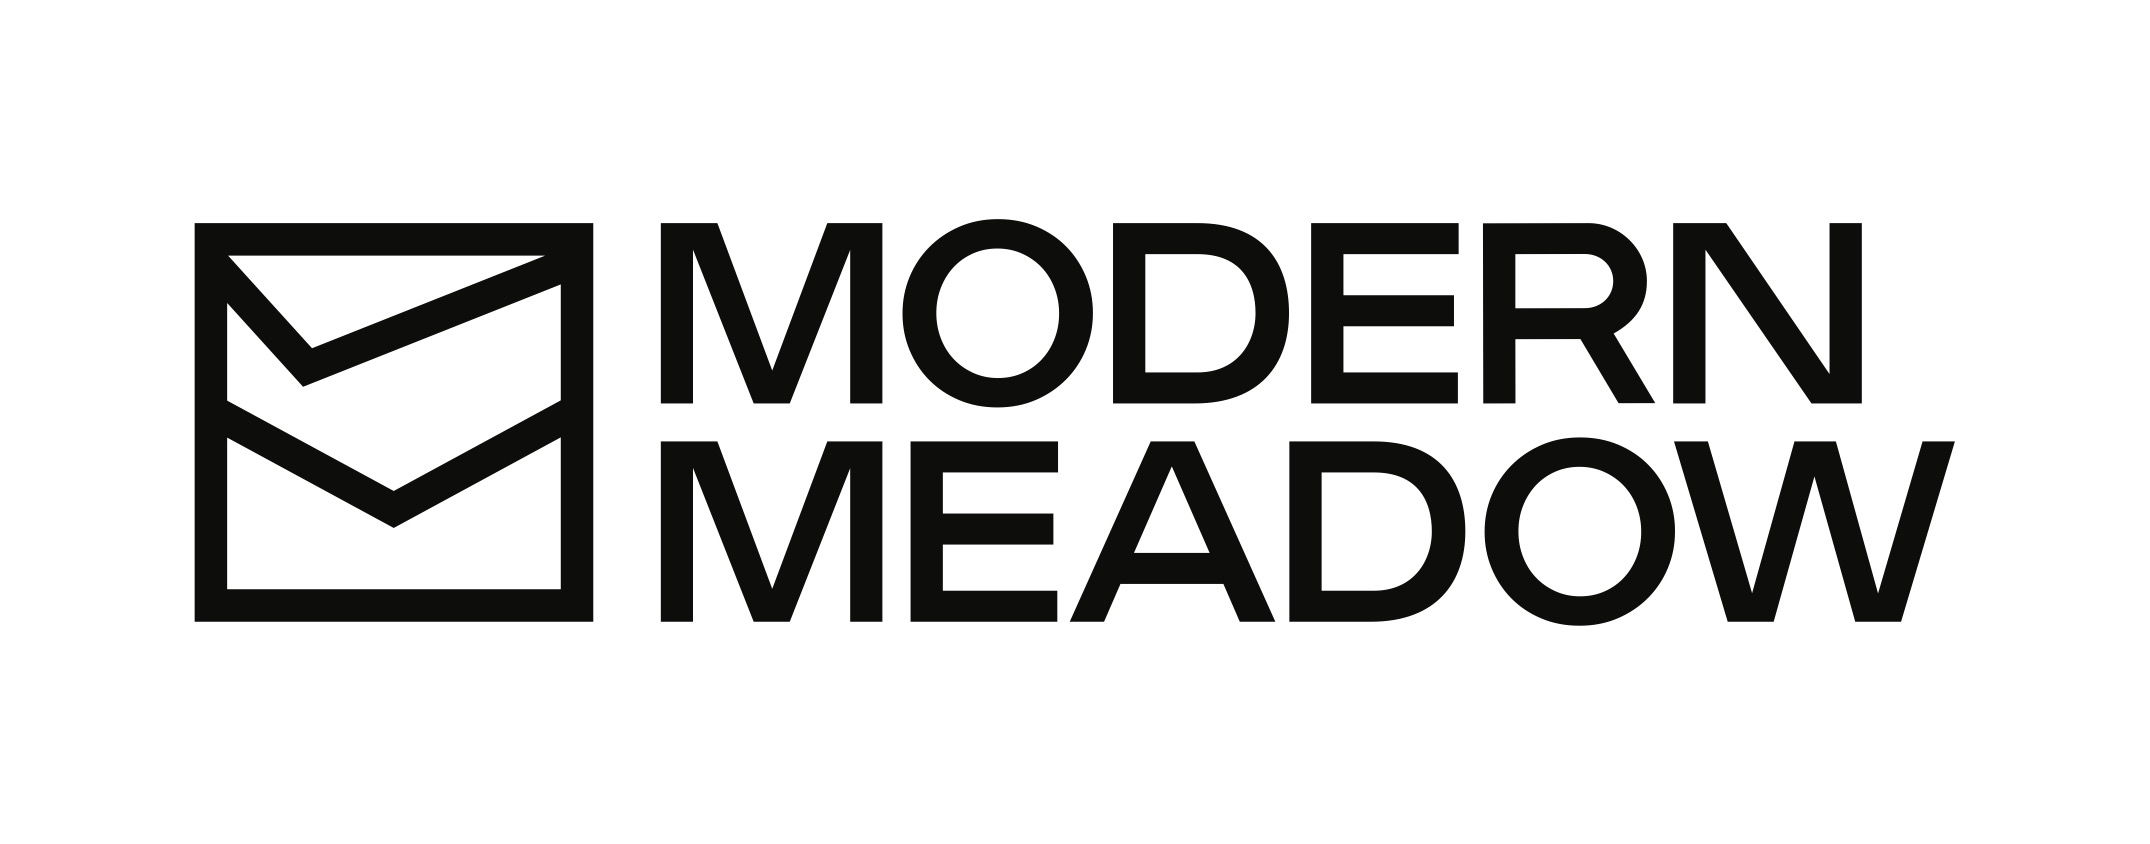 MODERN-MEADOW-LOGO-BLACK (2)